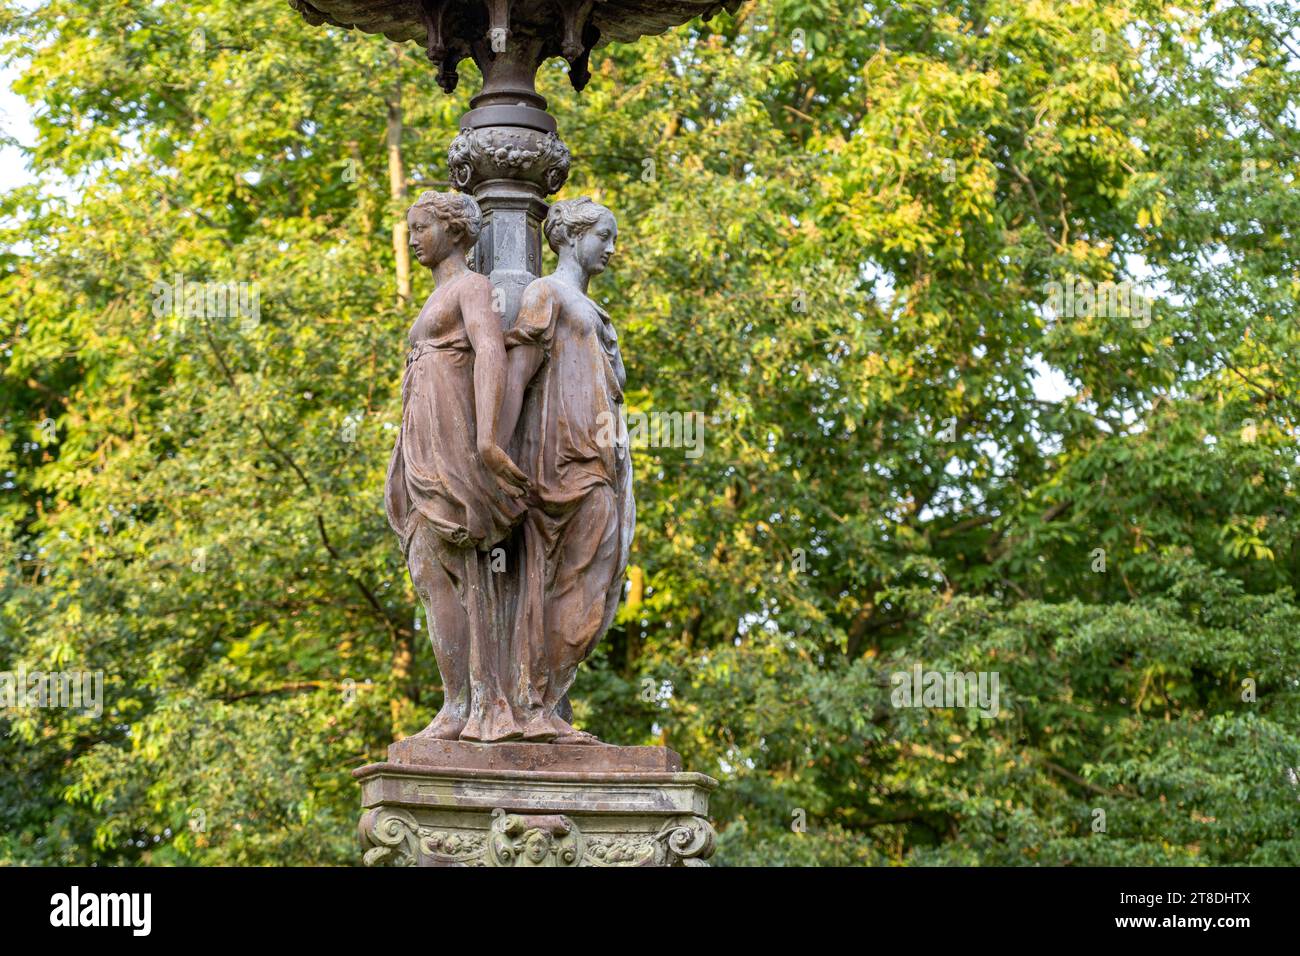 Skulpturen des Brunnen Fontaine Les Trois Grâces im Park Parc Saint-Pierre in Calais, Frankreich | Skulptur des Brunnens der drei Gnaden Fon Stockfoto